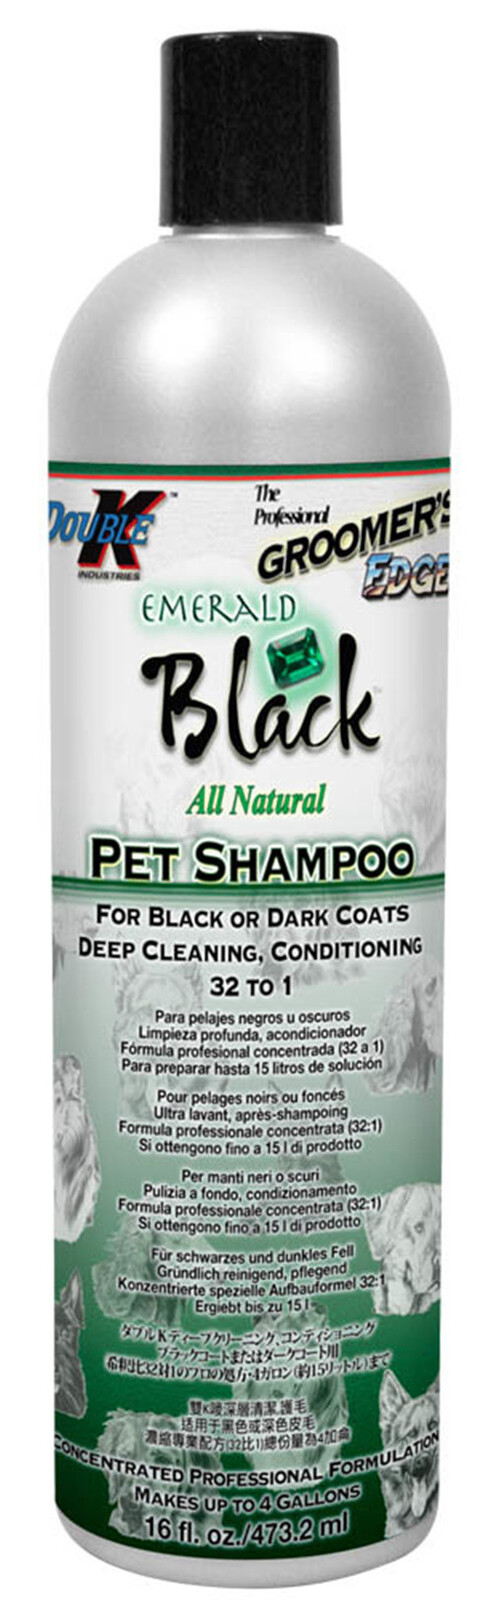 emerald black dog shampoo